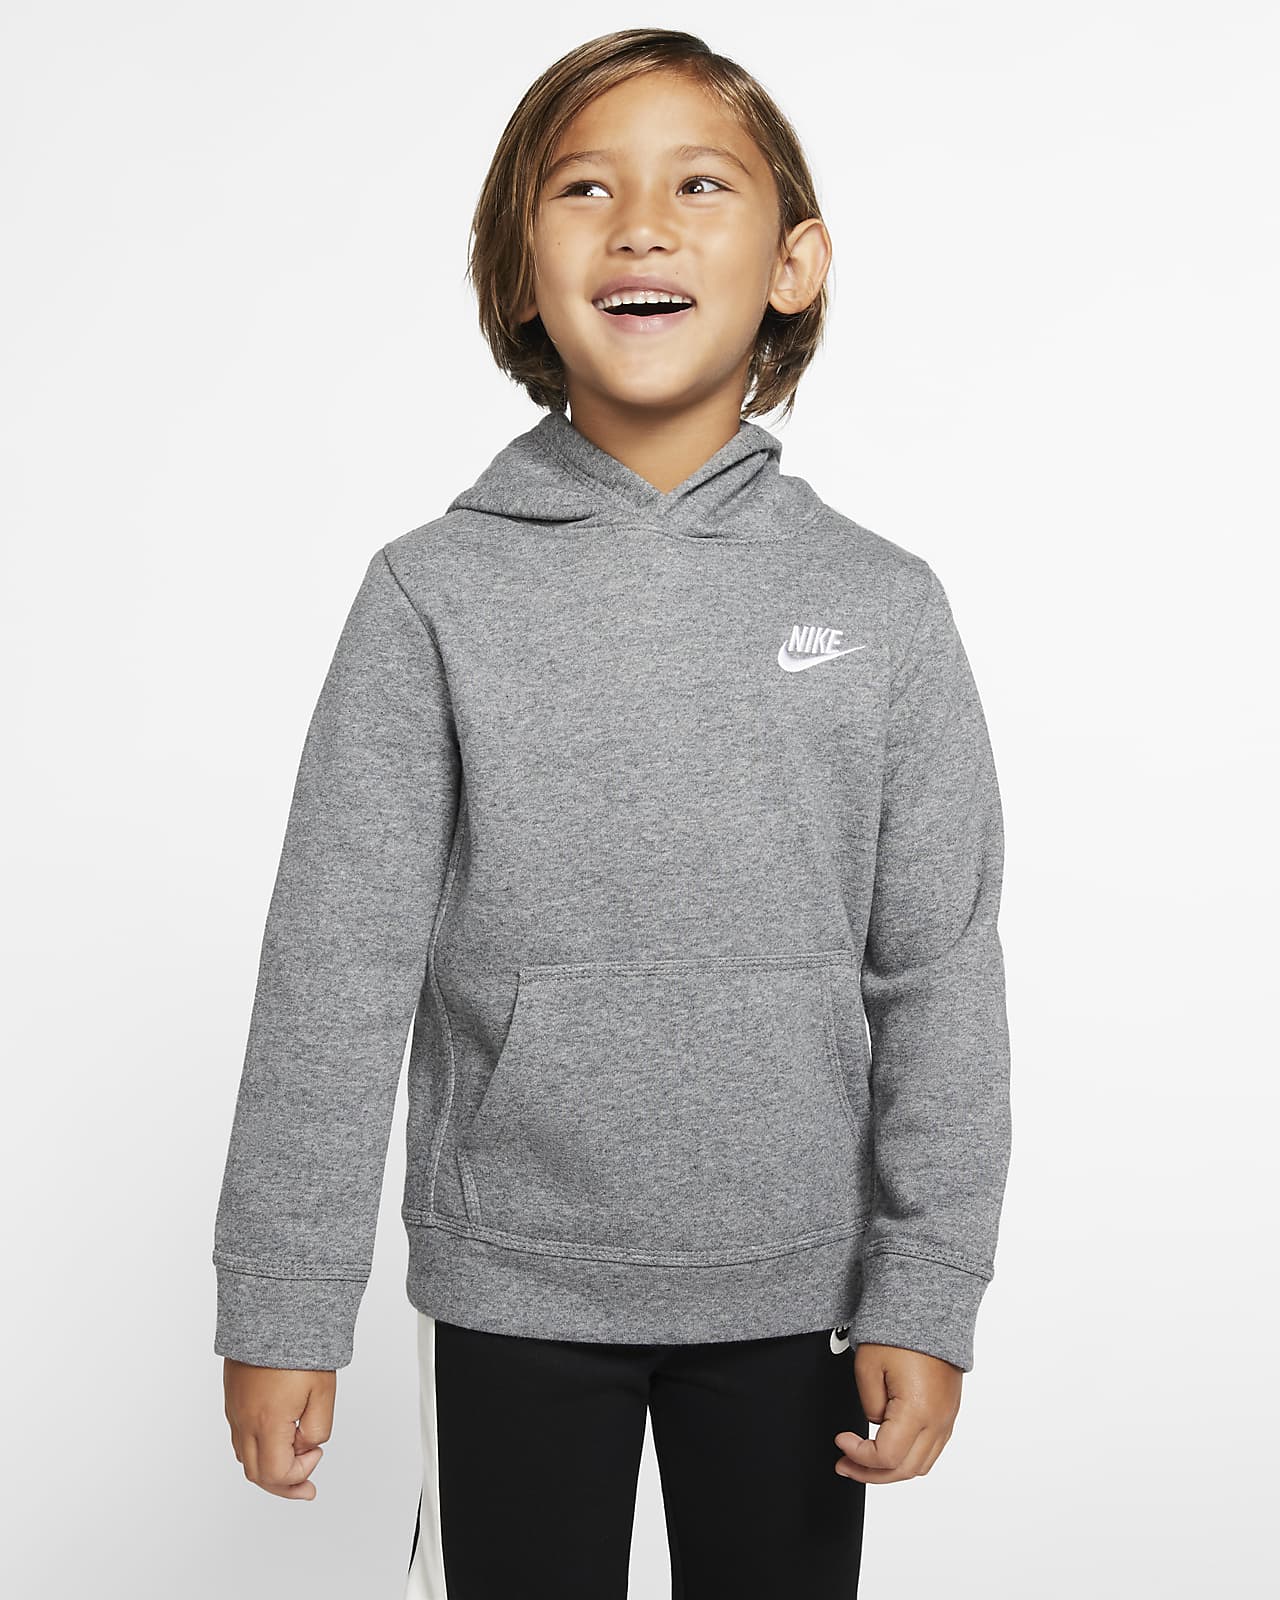 Nike Sportswear i fleece til mindre børn. Nike